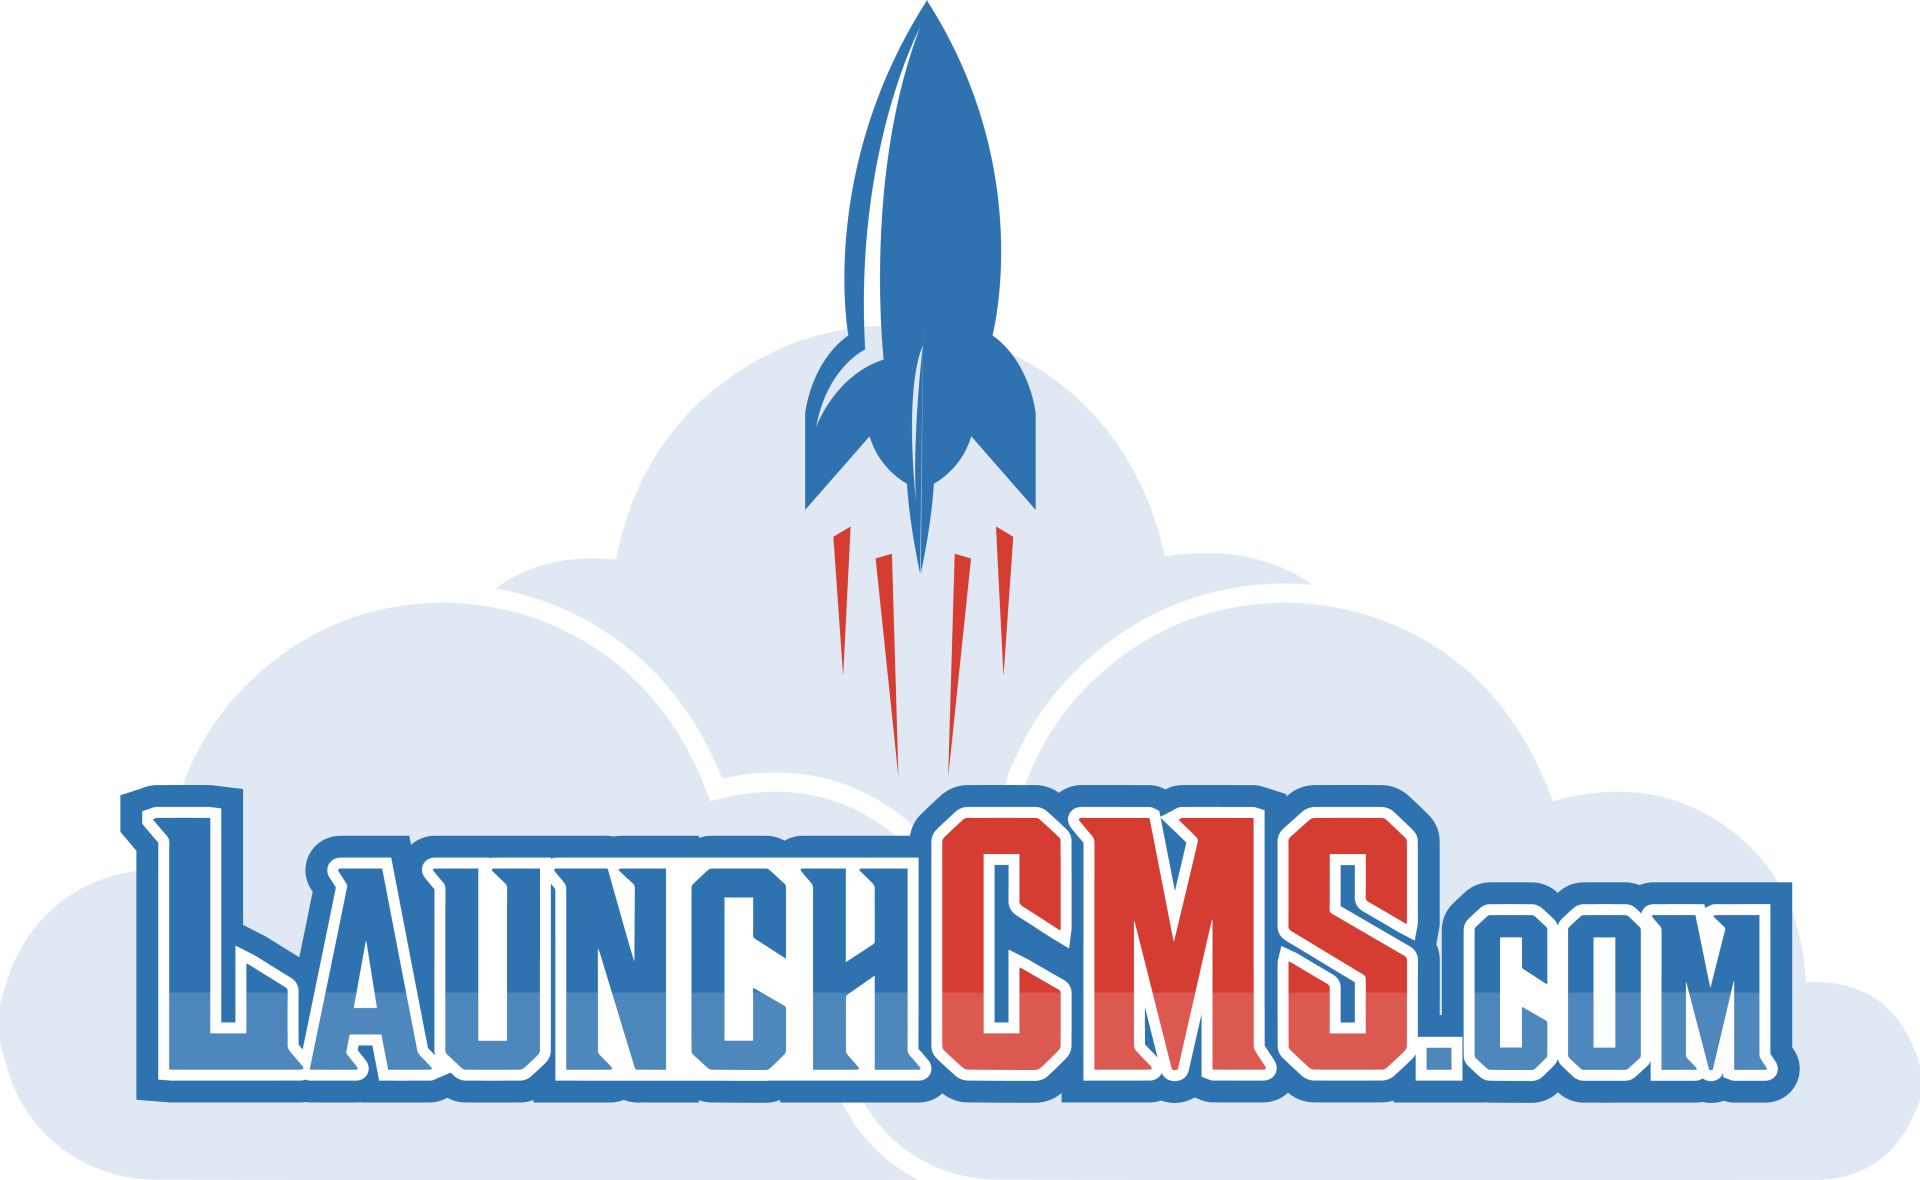 LaunchCMS.com Logo